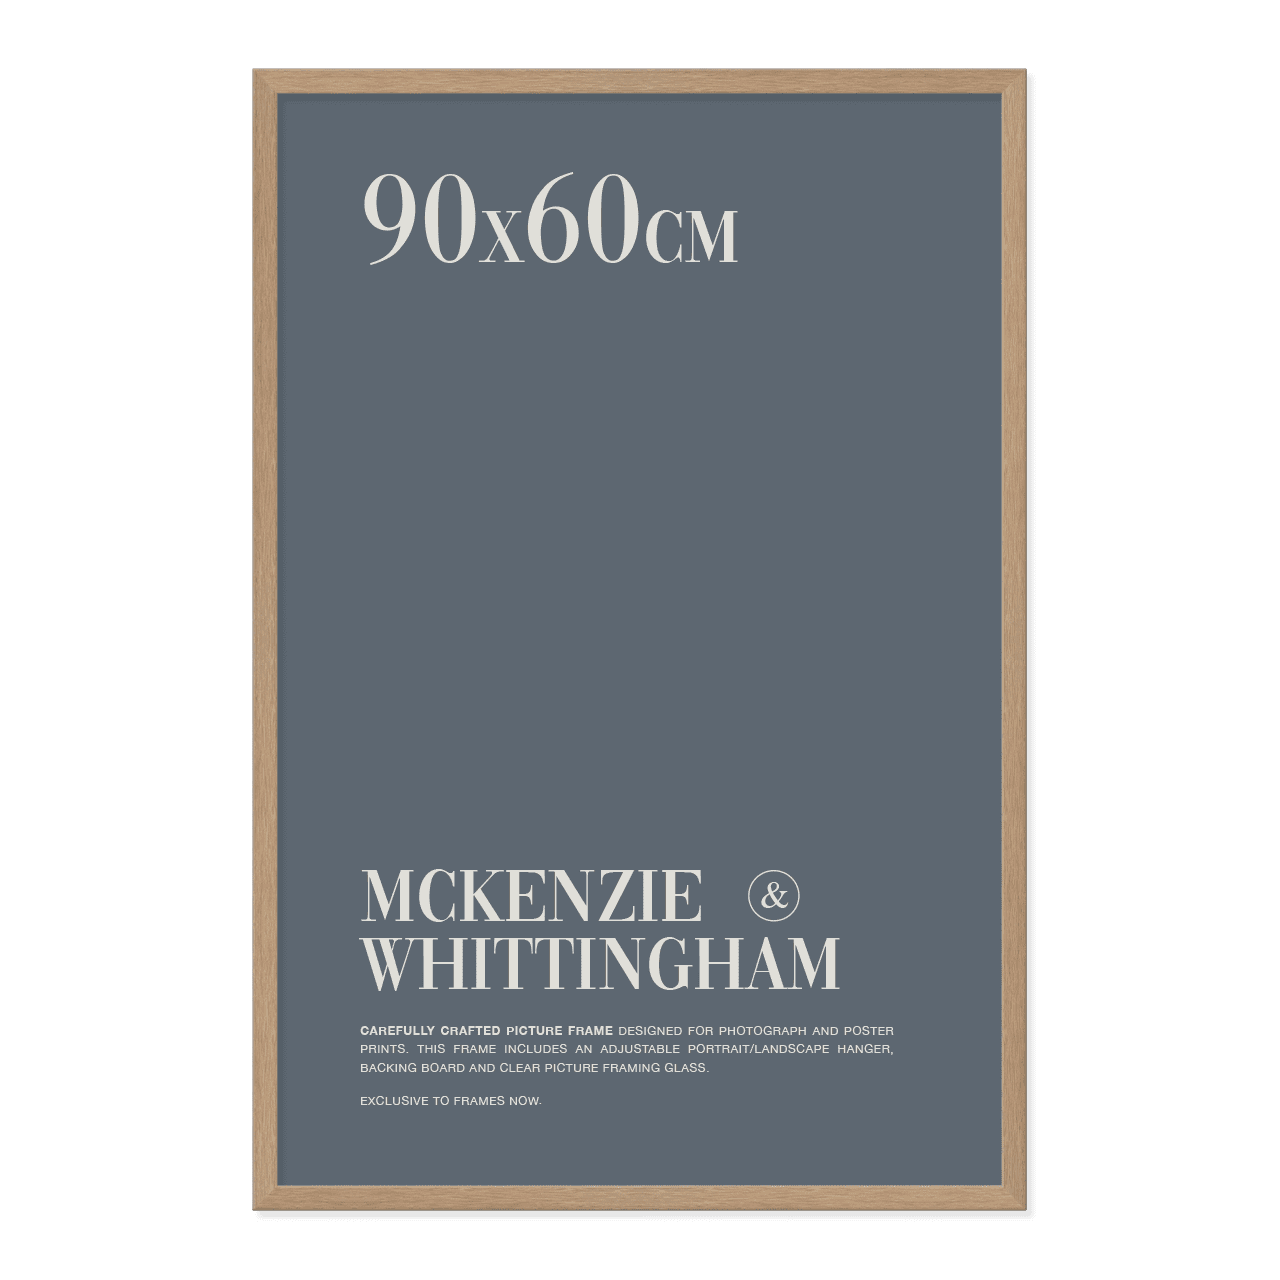 McKenzie & Whittingham Natural Picture Frame for 90 x 60cm Artwork